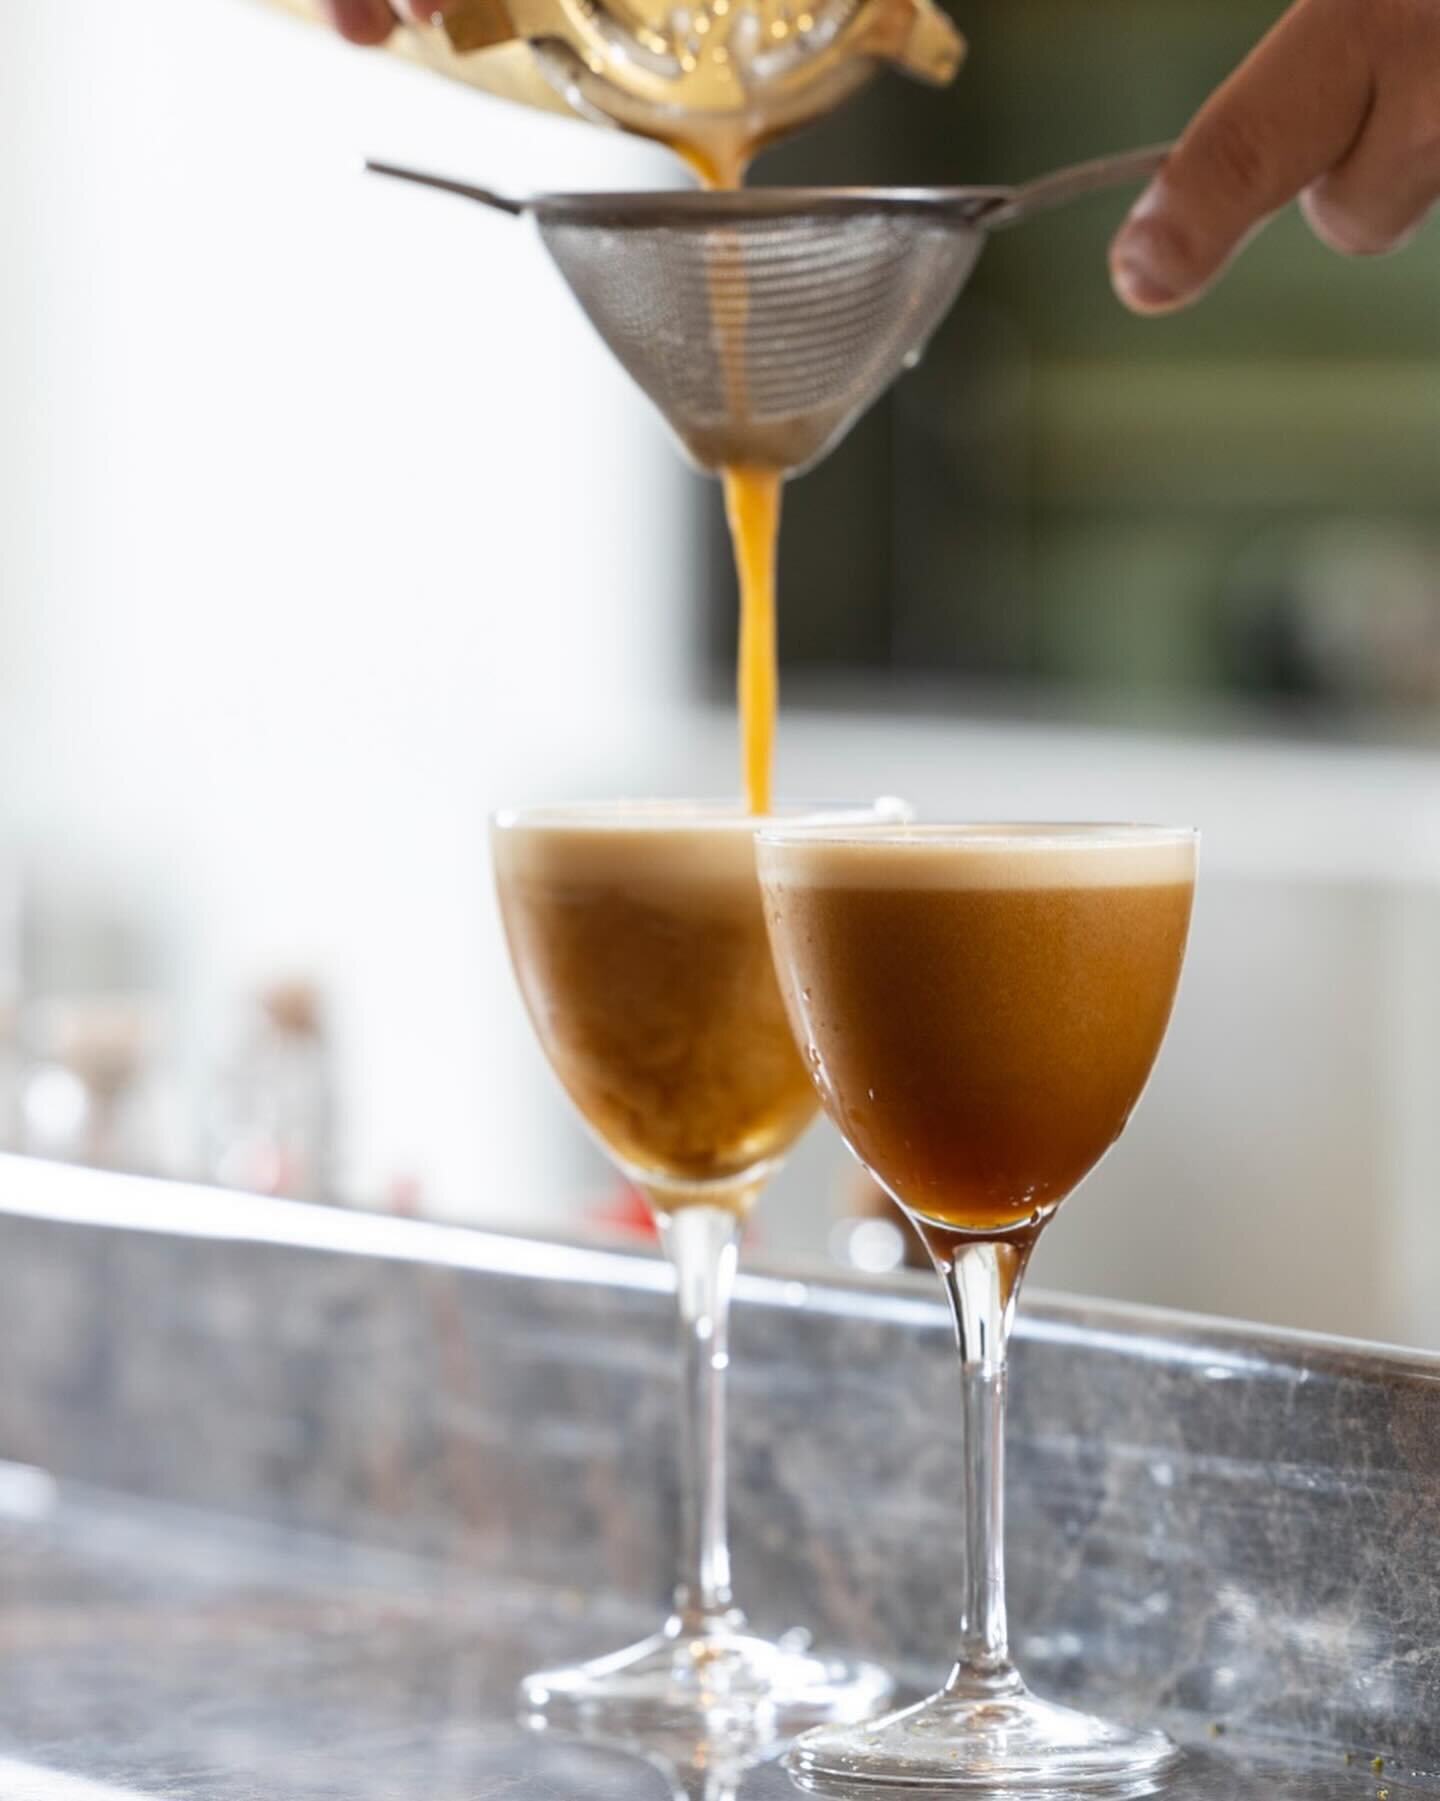 This is our coffee martini 🍸

Cardamom infused vodka, coffee, vanilla, salted pistachio - perfect!

#hkcocktails #wetjanuary #drinkstagram #hkig #hkrestaurant #pickmeup #coffeecoffeecoffee #soho